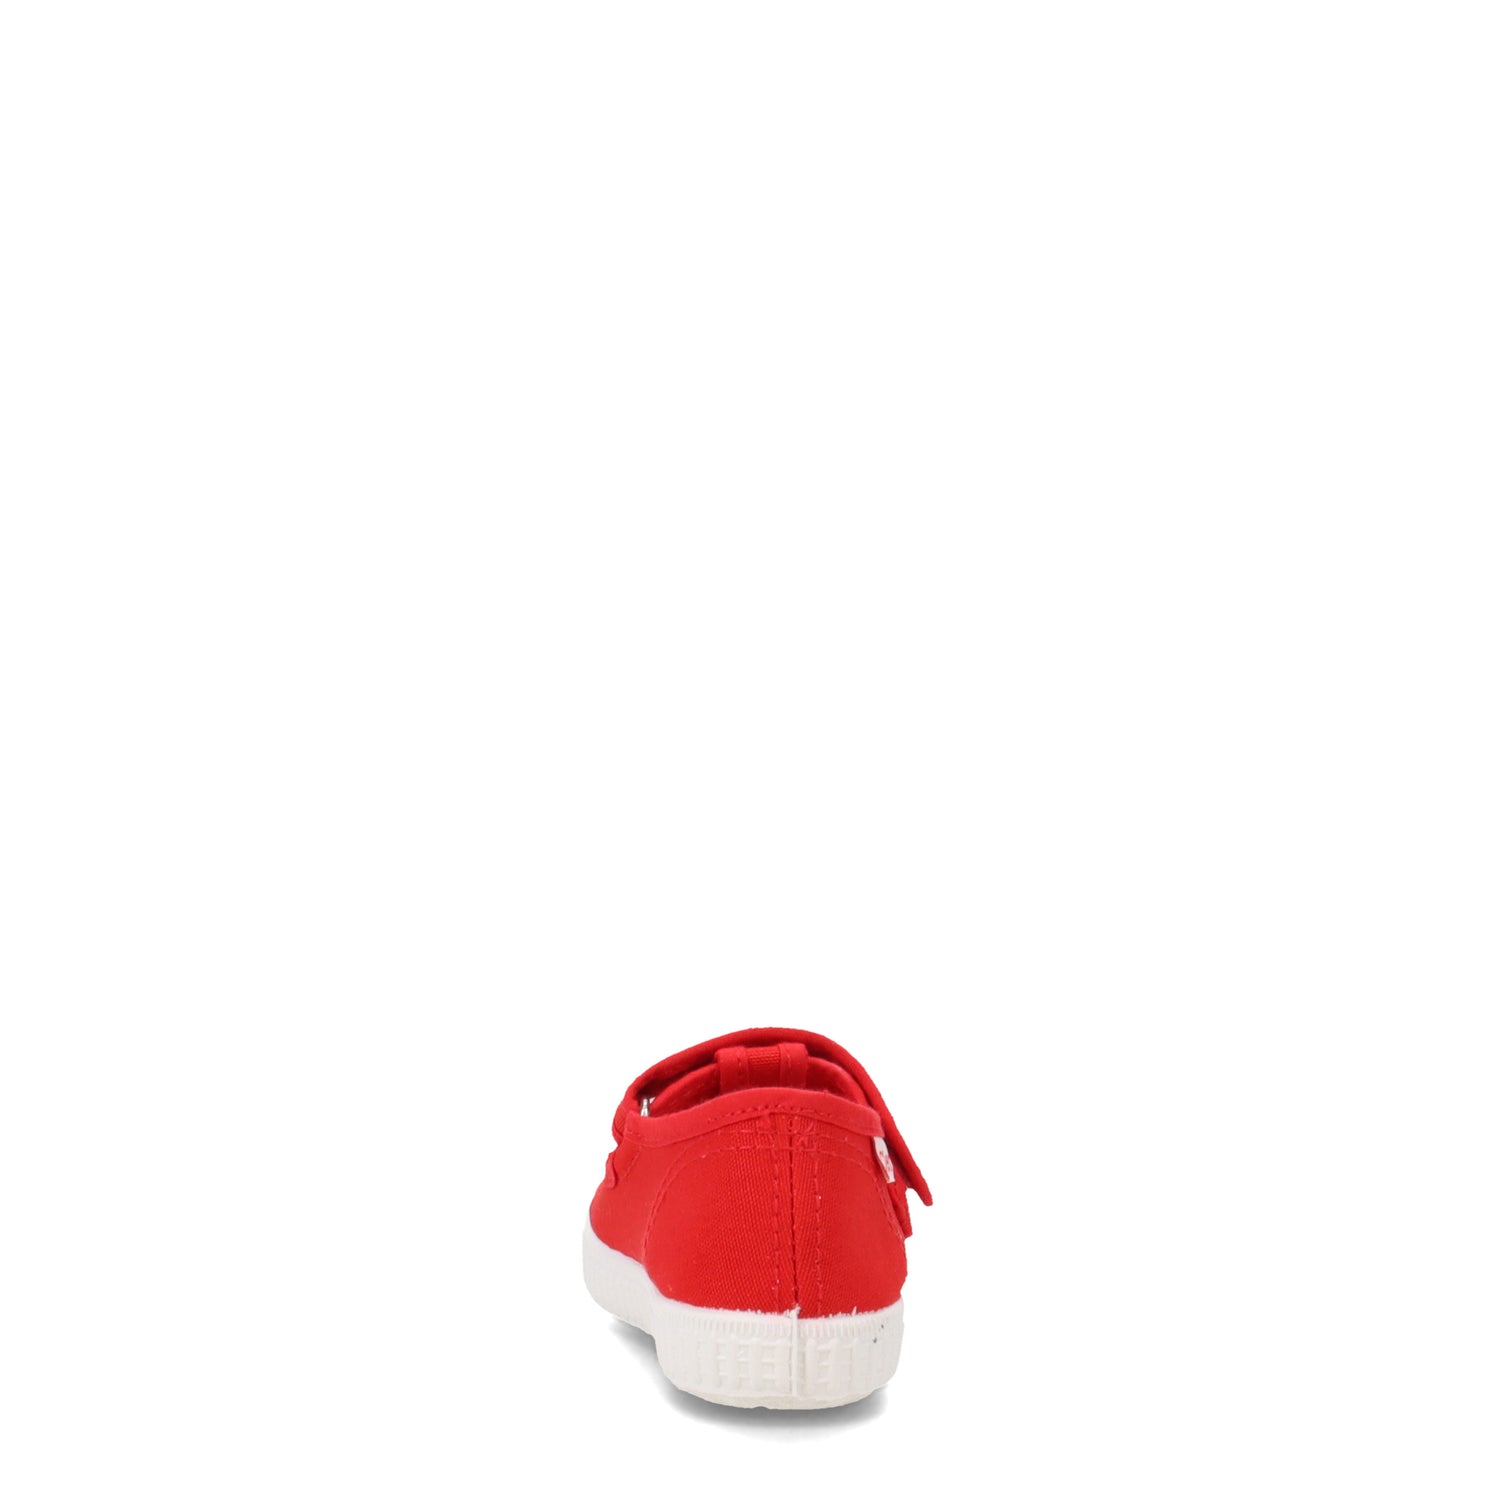 Peltz Shoes  Girl's Cienta T-Strap Sneaker - Toddler & Little Kid RED BEAN 50000.02